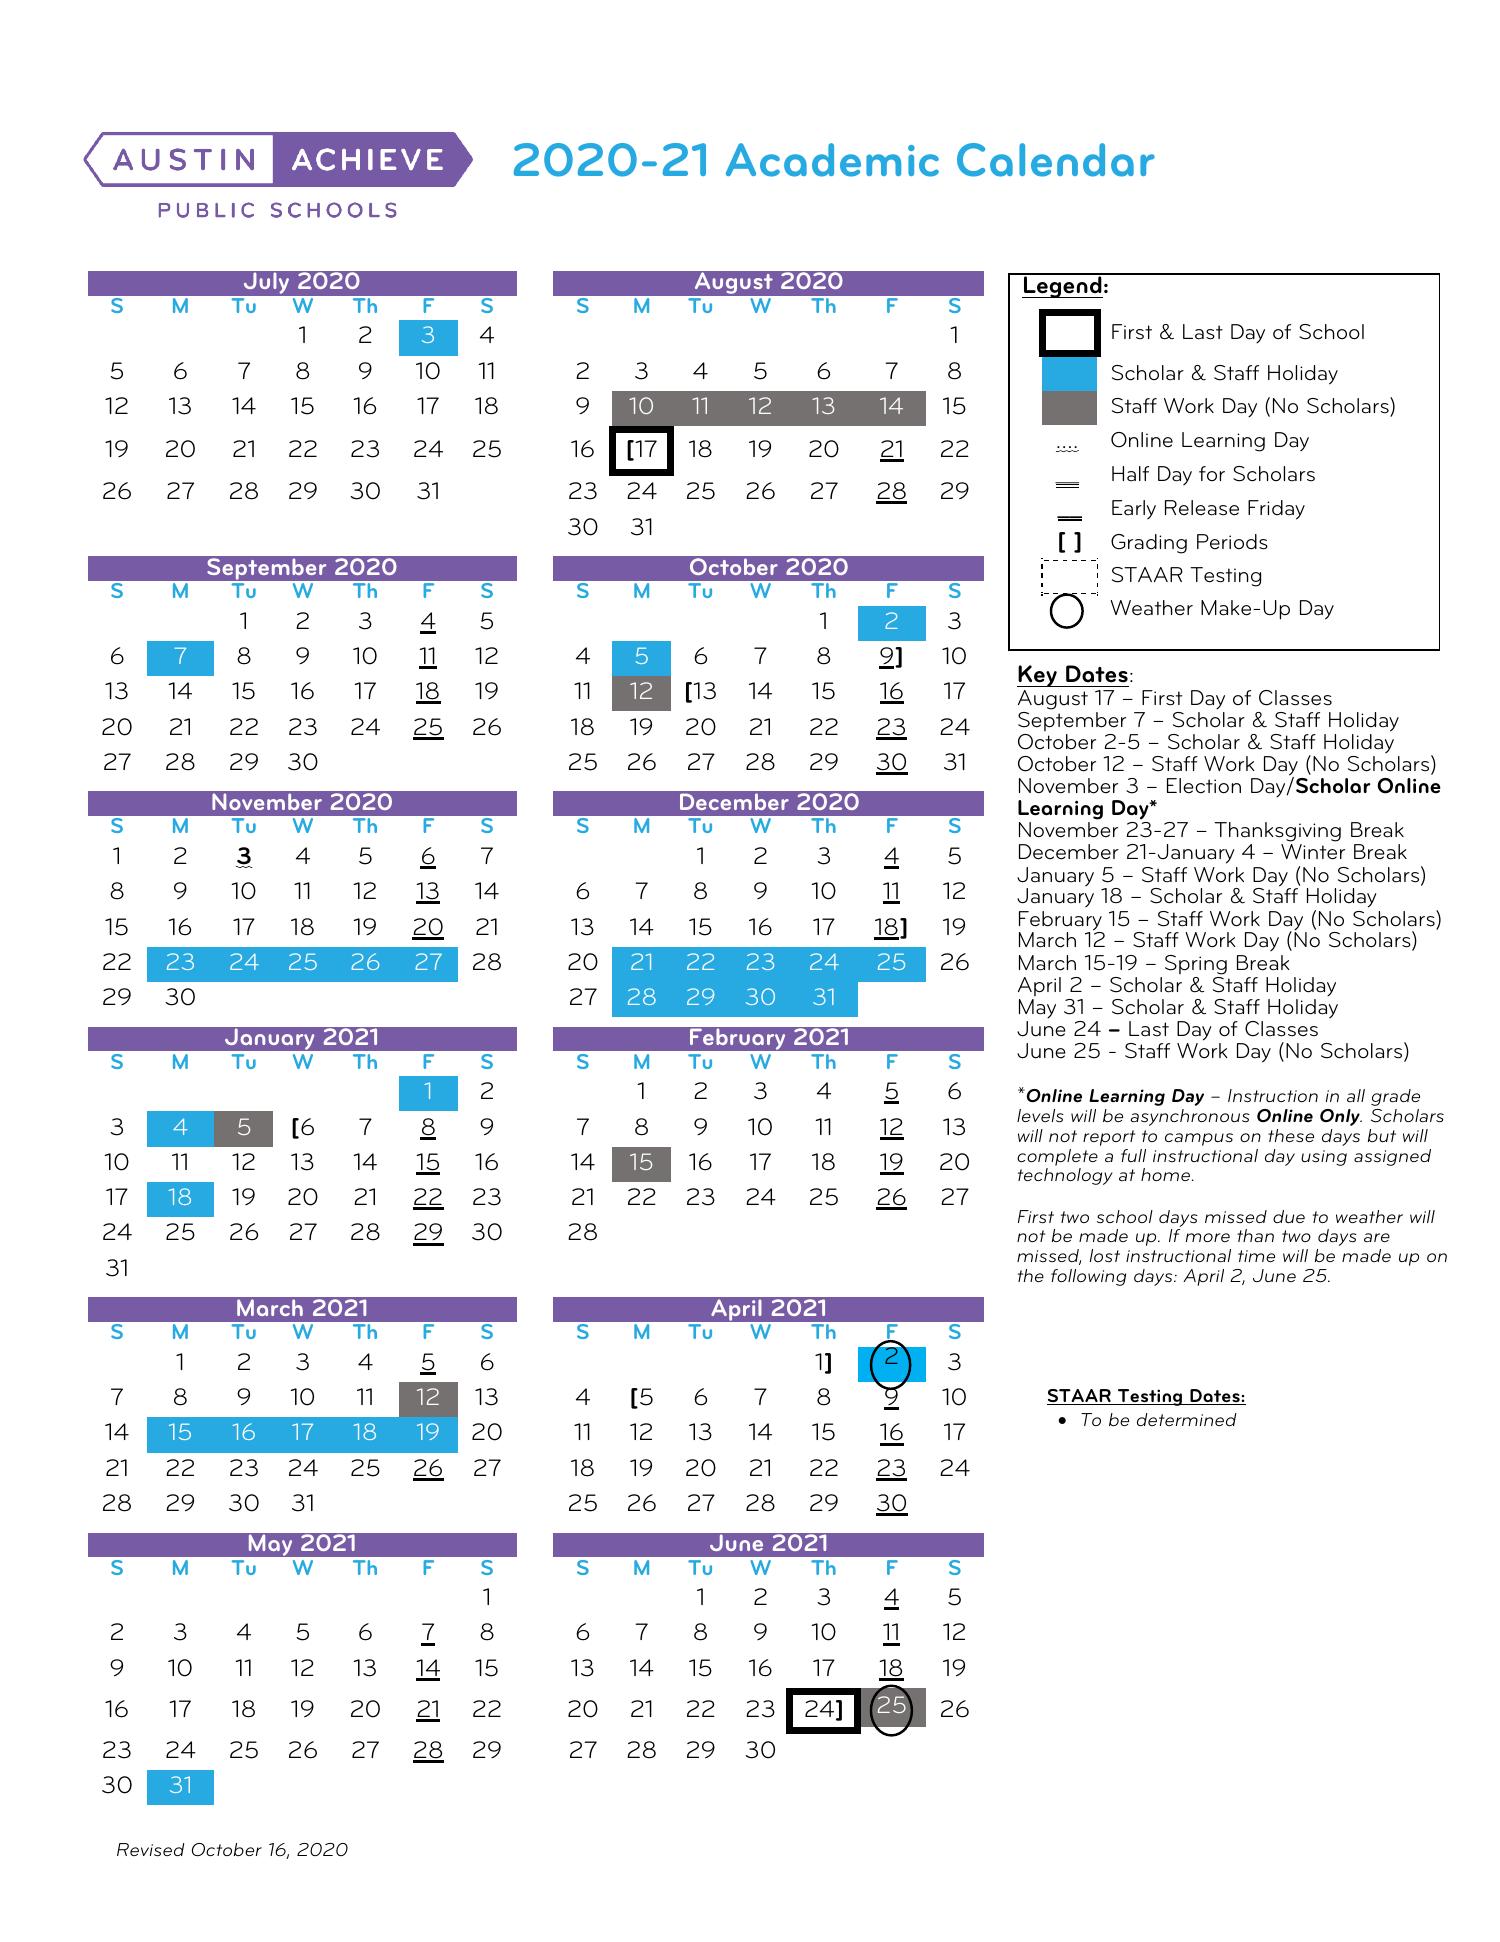 AAPS Academic Calendar 202021 v4.4_Oct292020.pdf DocDroid